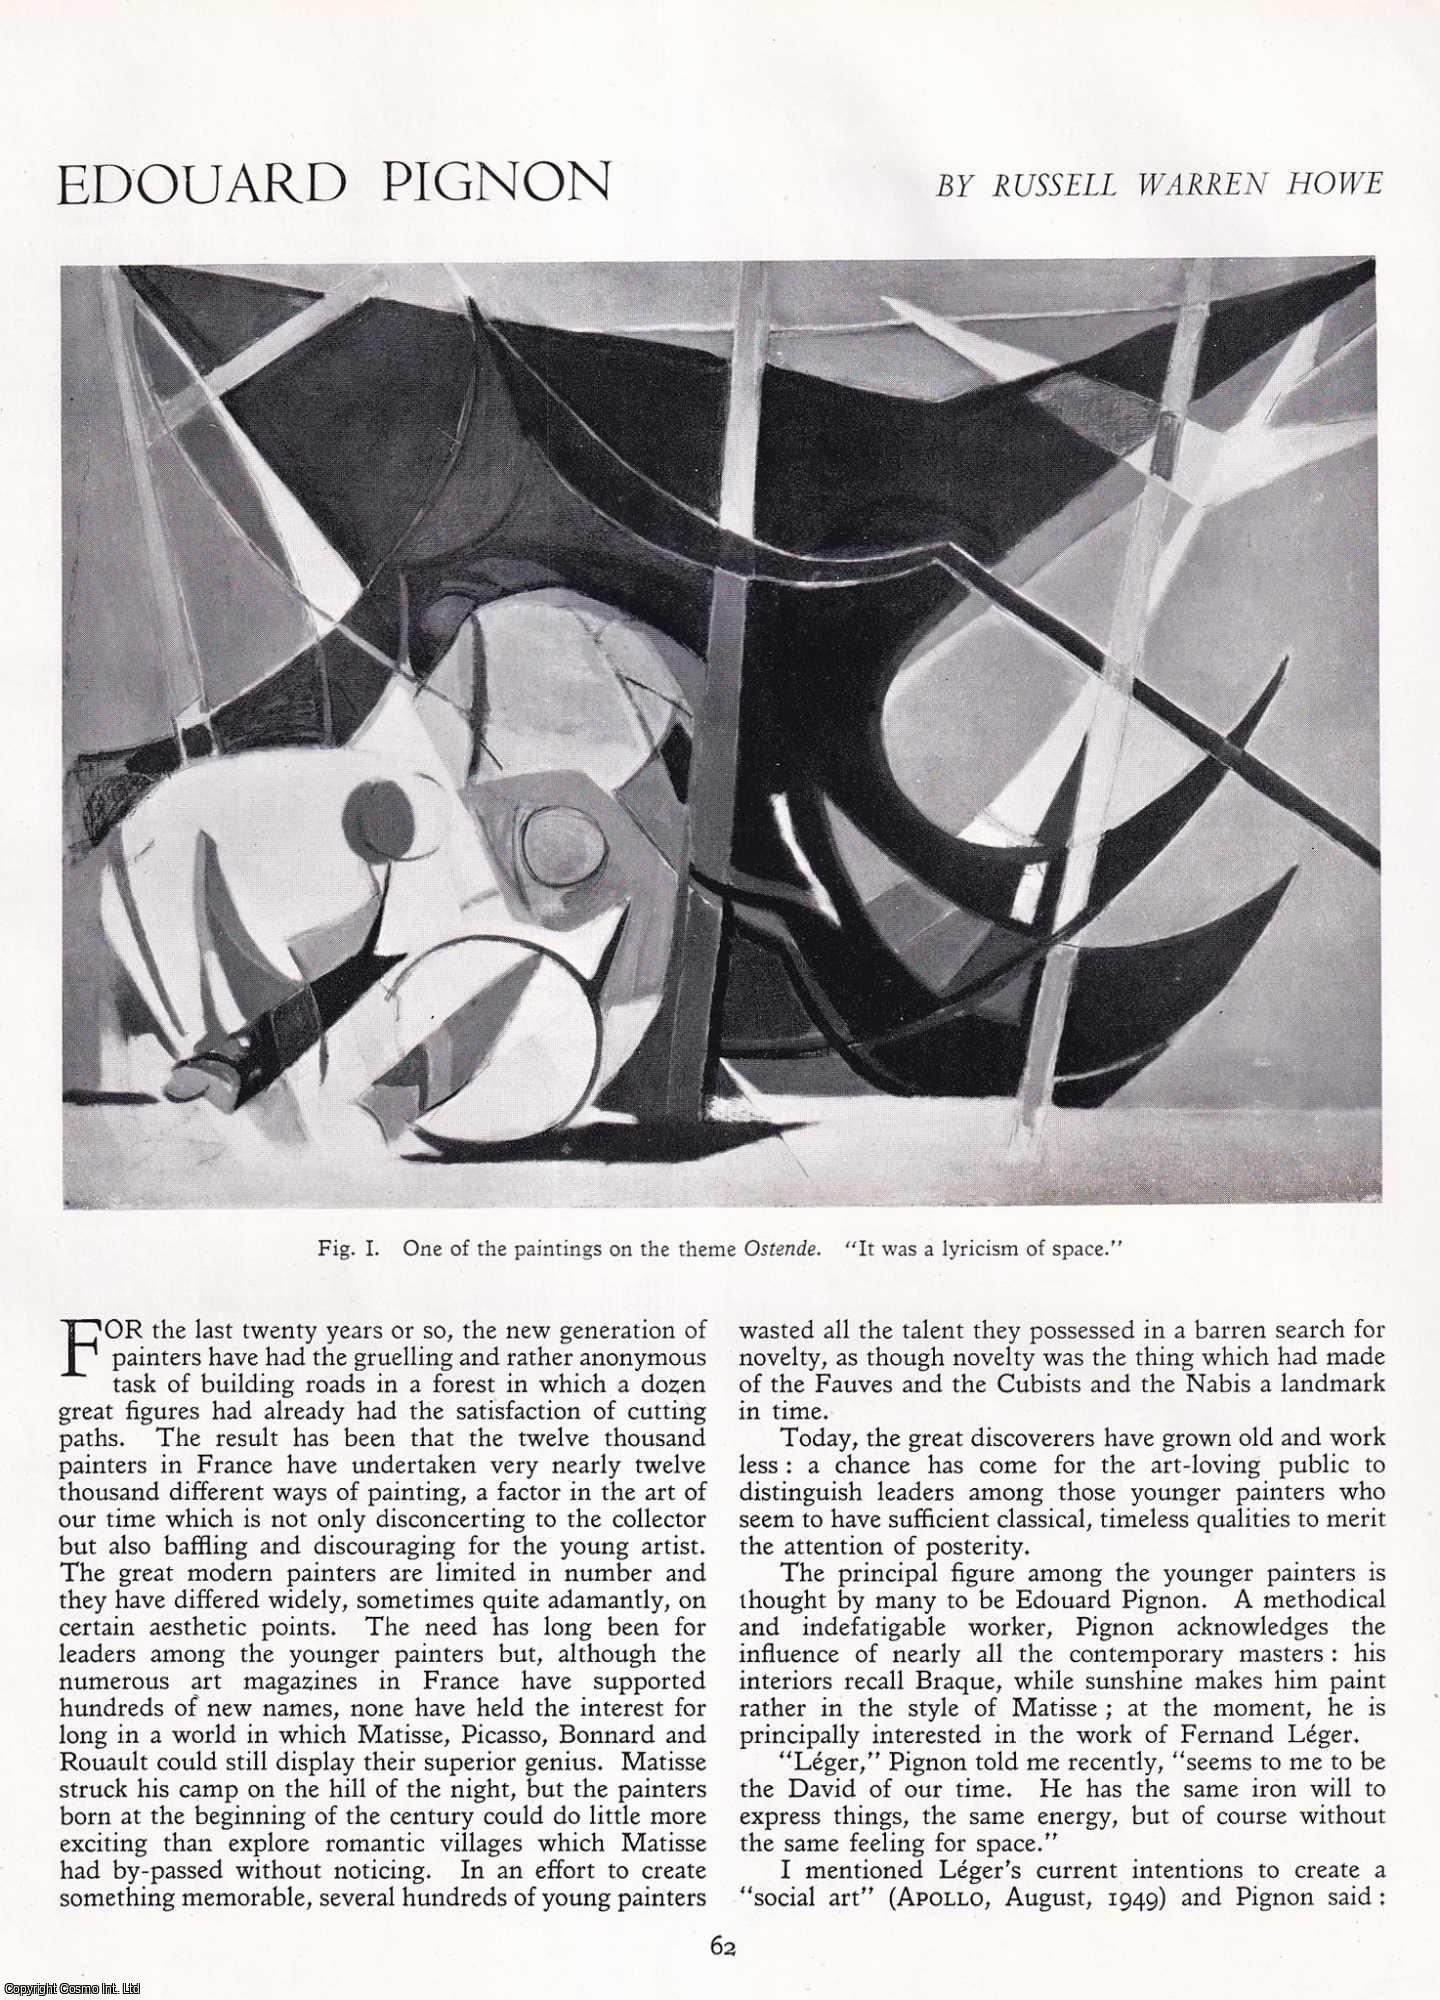 Russell Warren Howe - Edouard Pignon. An original article from Apollo, International Magazine of the Arts, 1951.